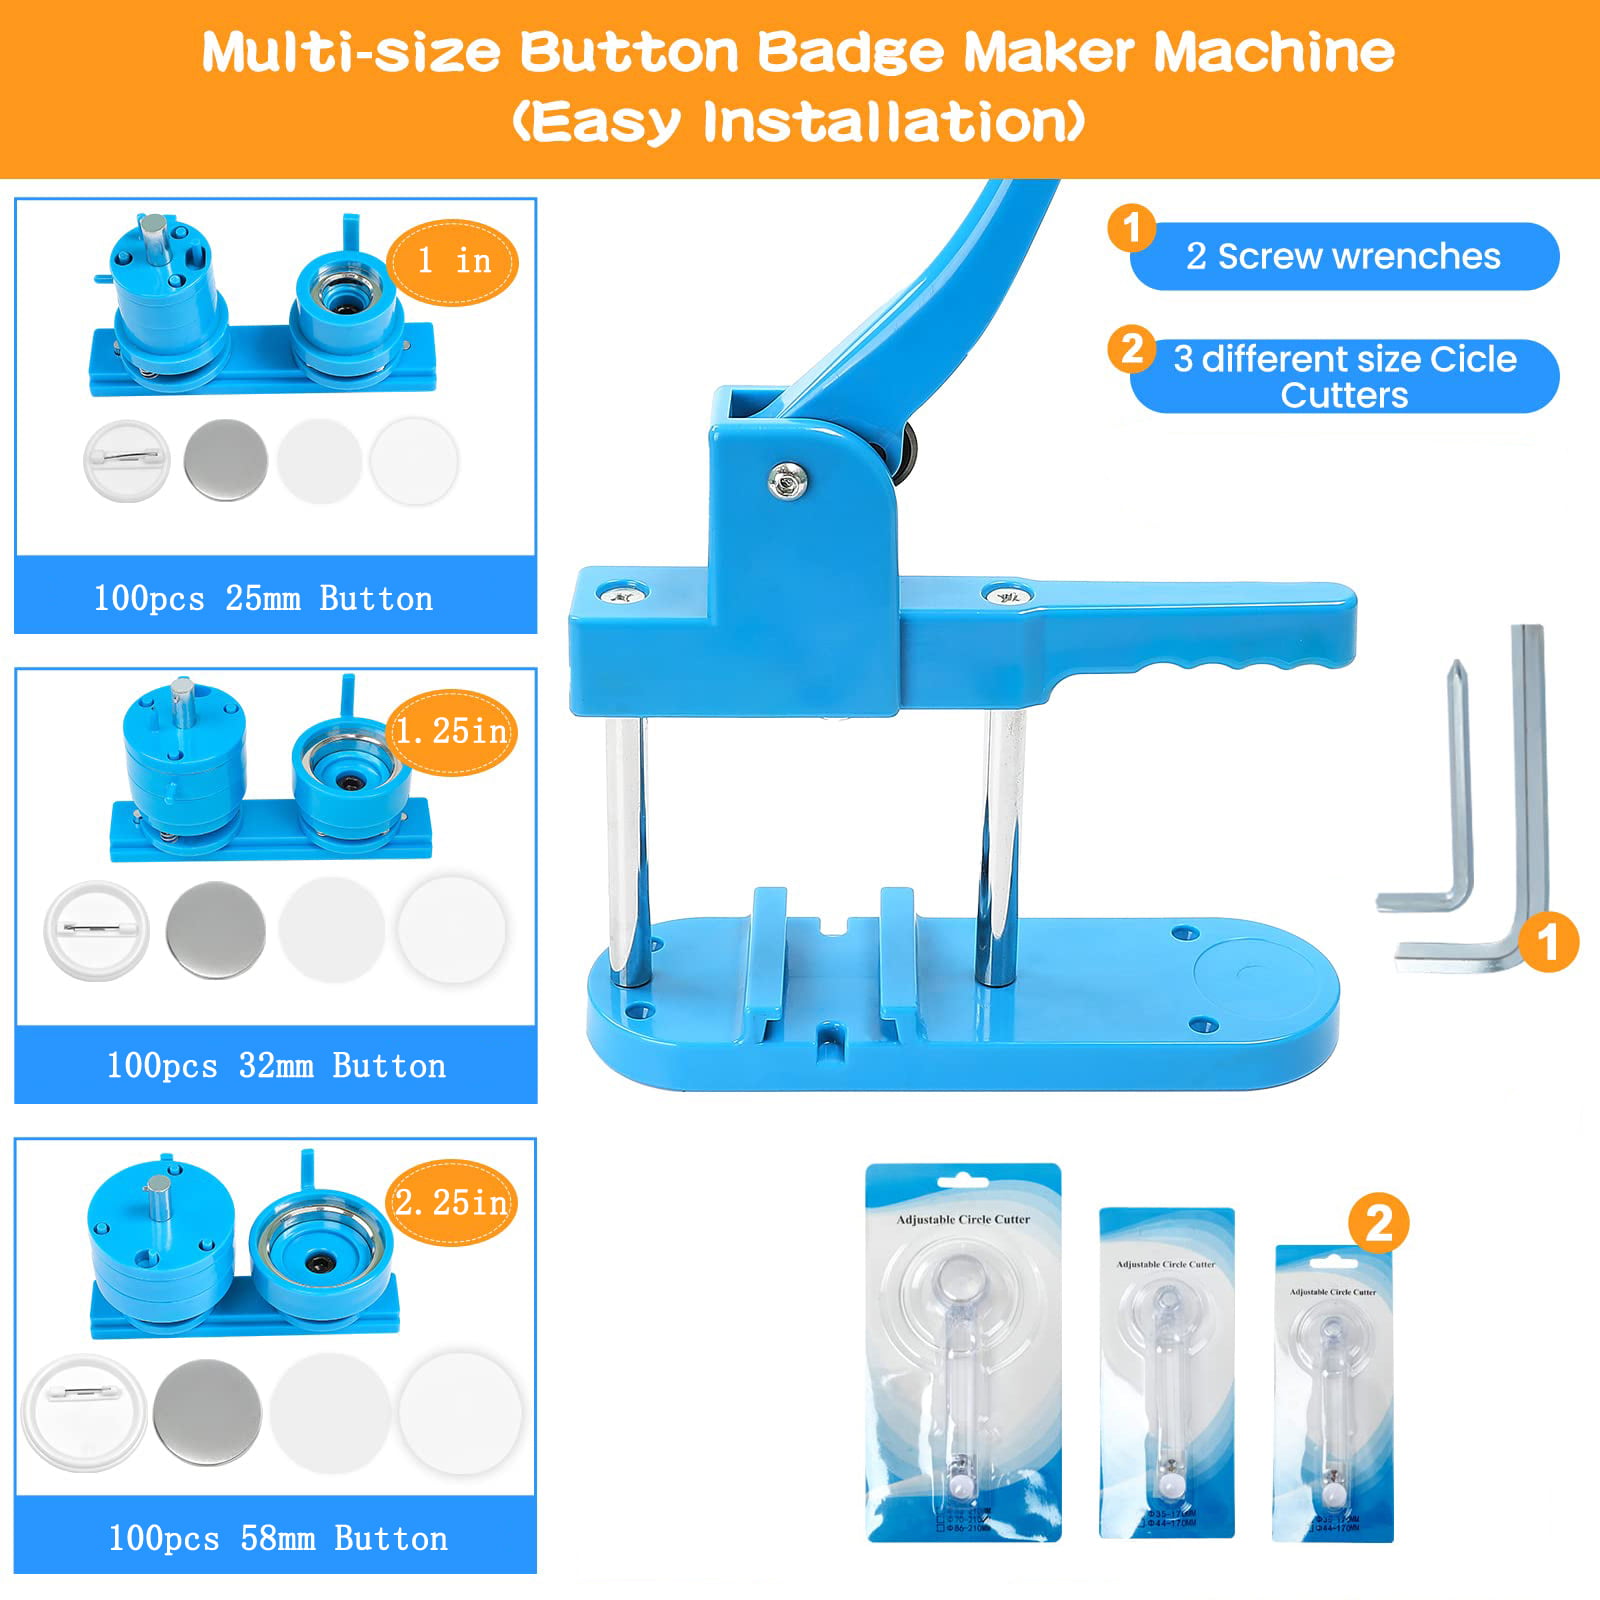 Rntfunre Button Maker Machine Multiple Sizes 1+1.25+2.25 inch, DIY Button Badge Maker Button Press Machine with 300pcs Button Maker Supplies & Cutter 